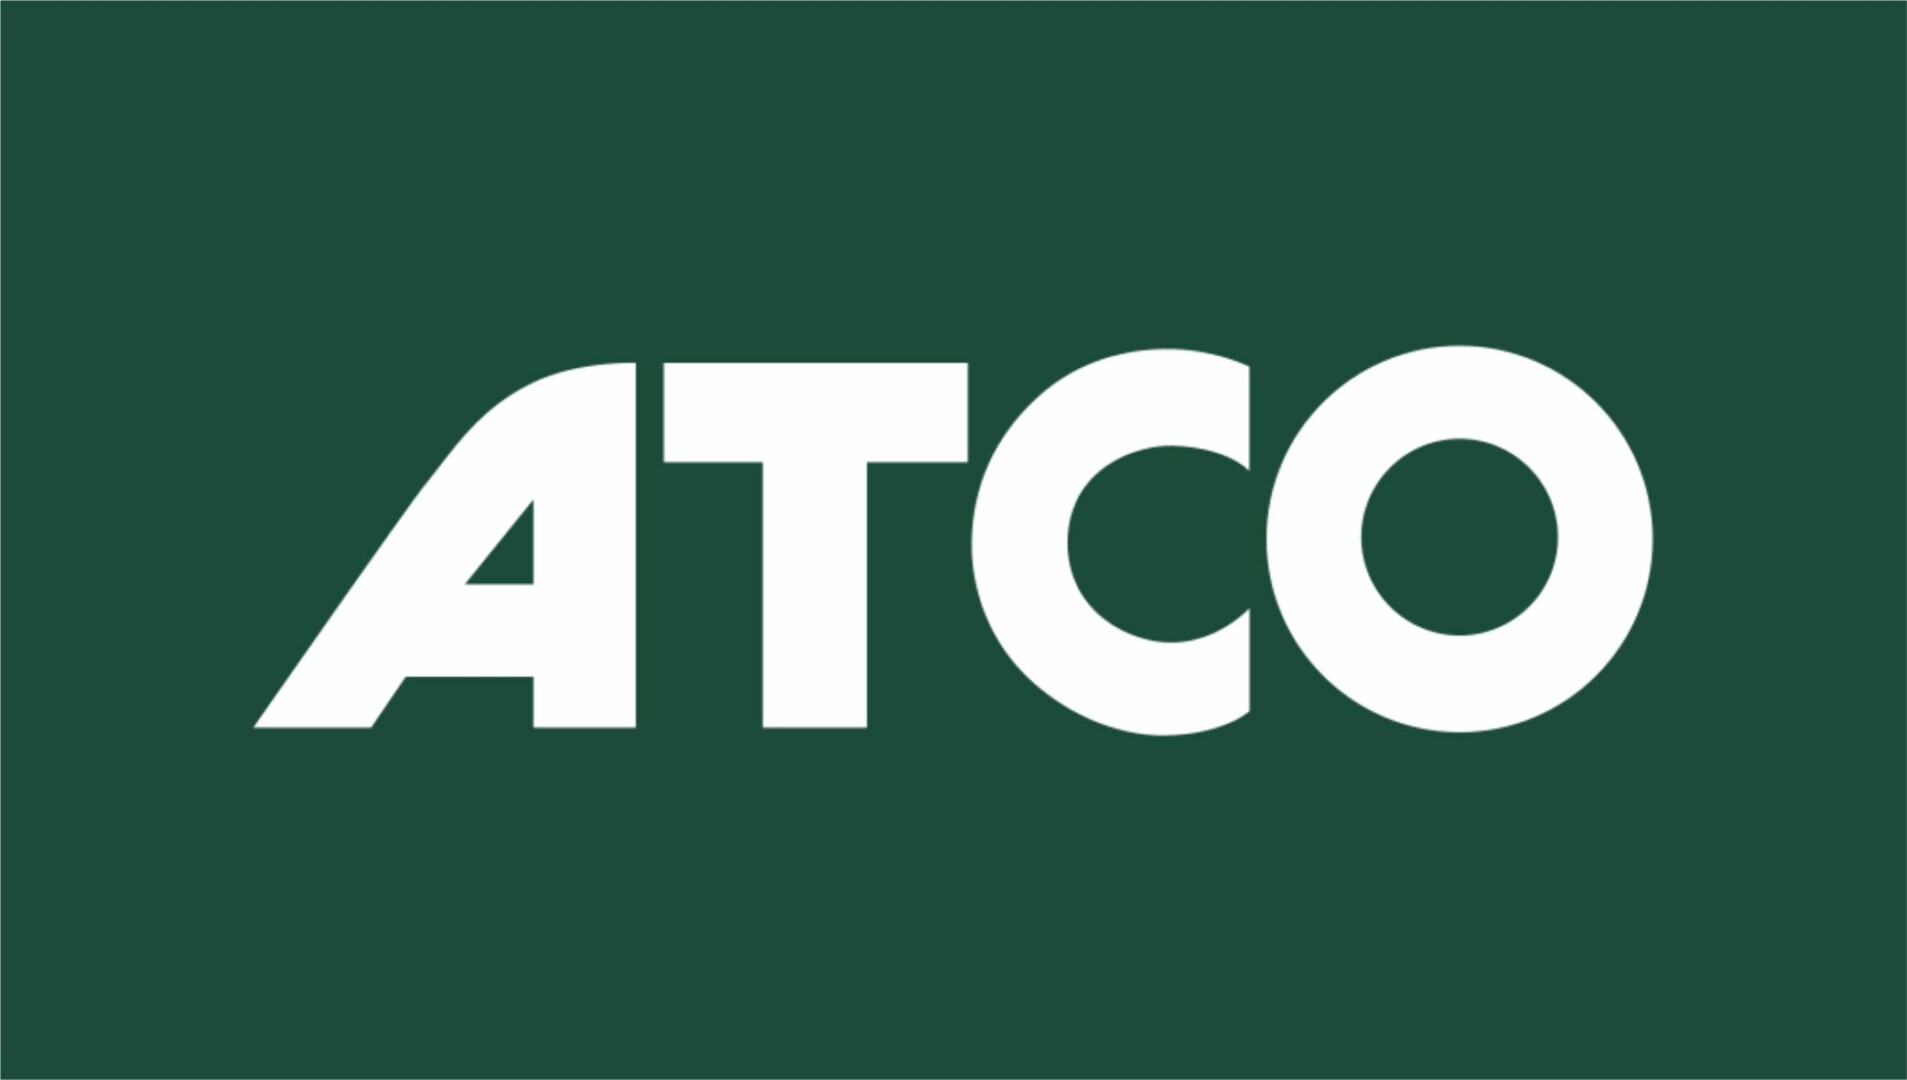 Atco Logo